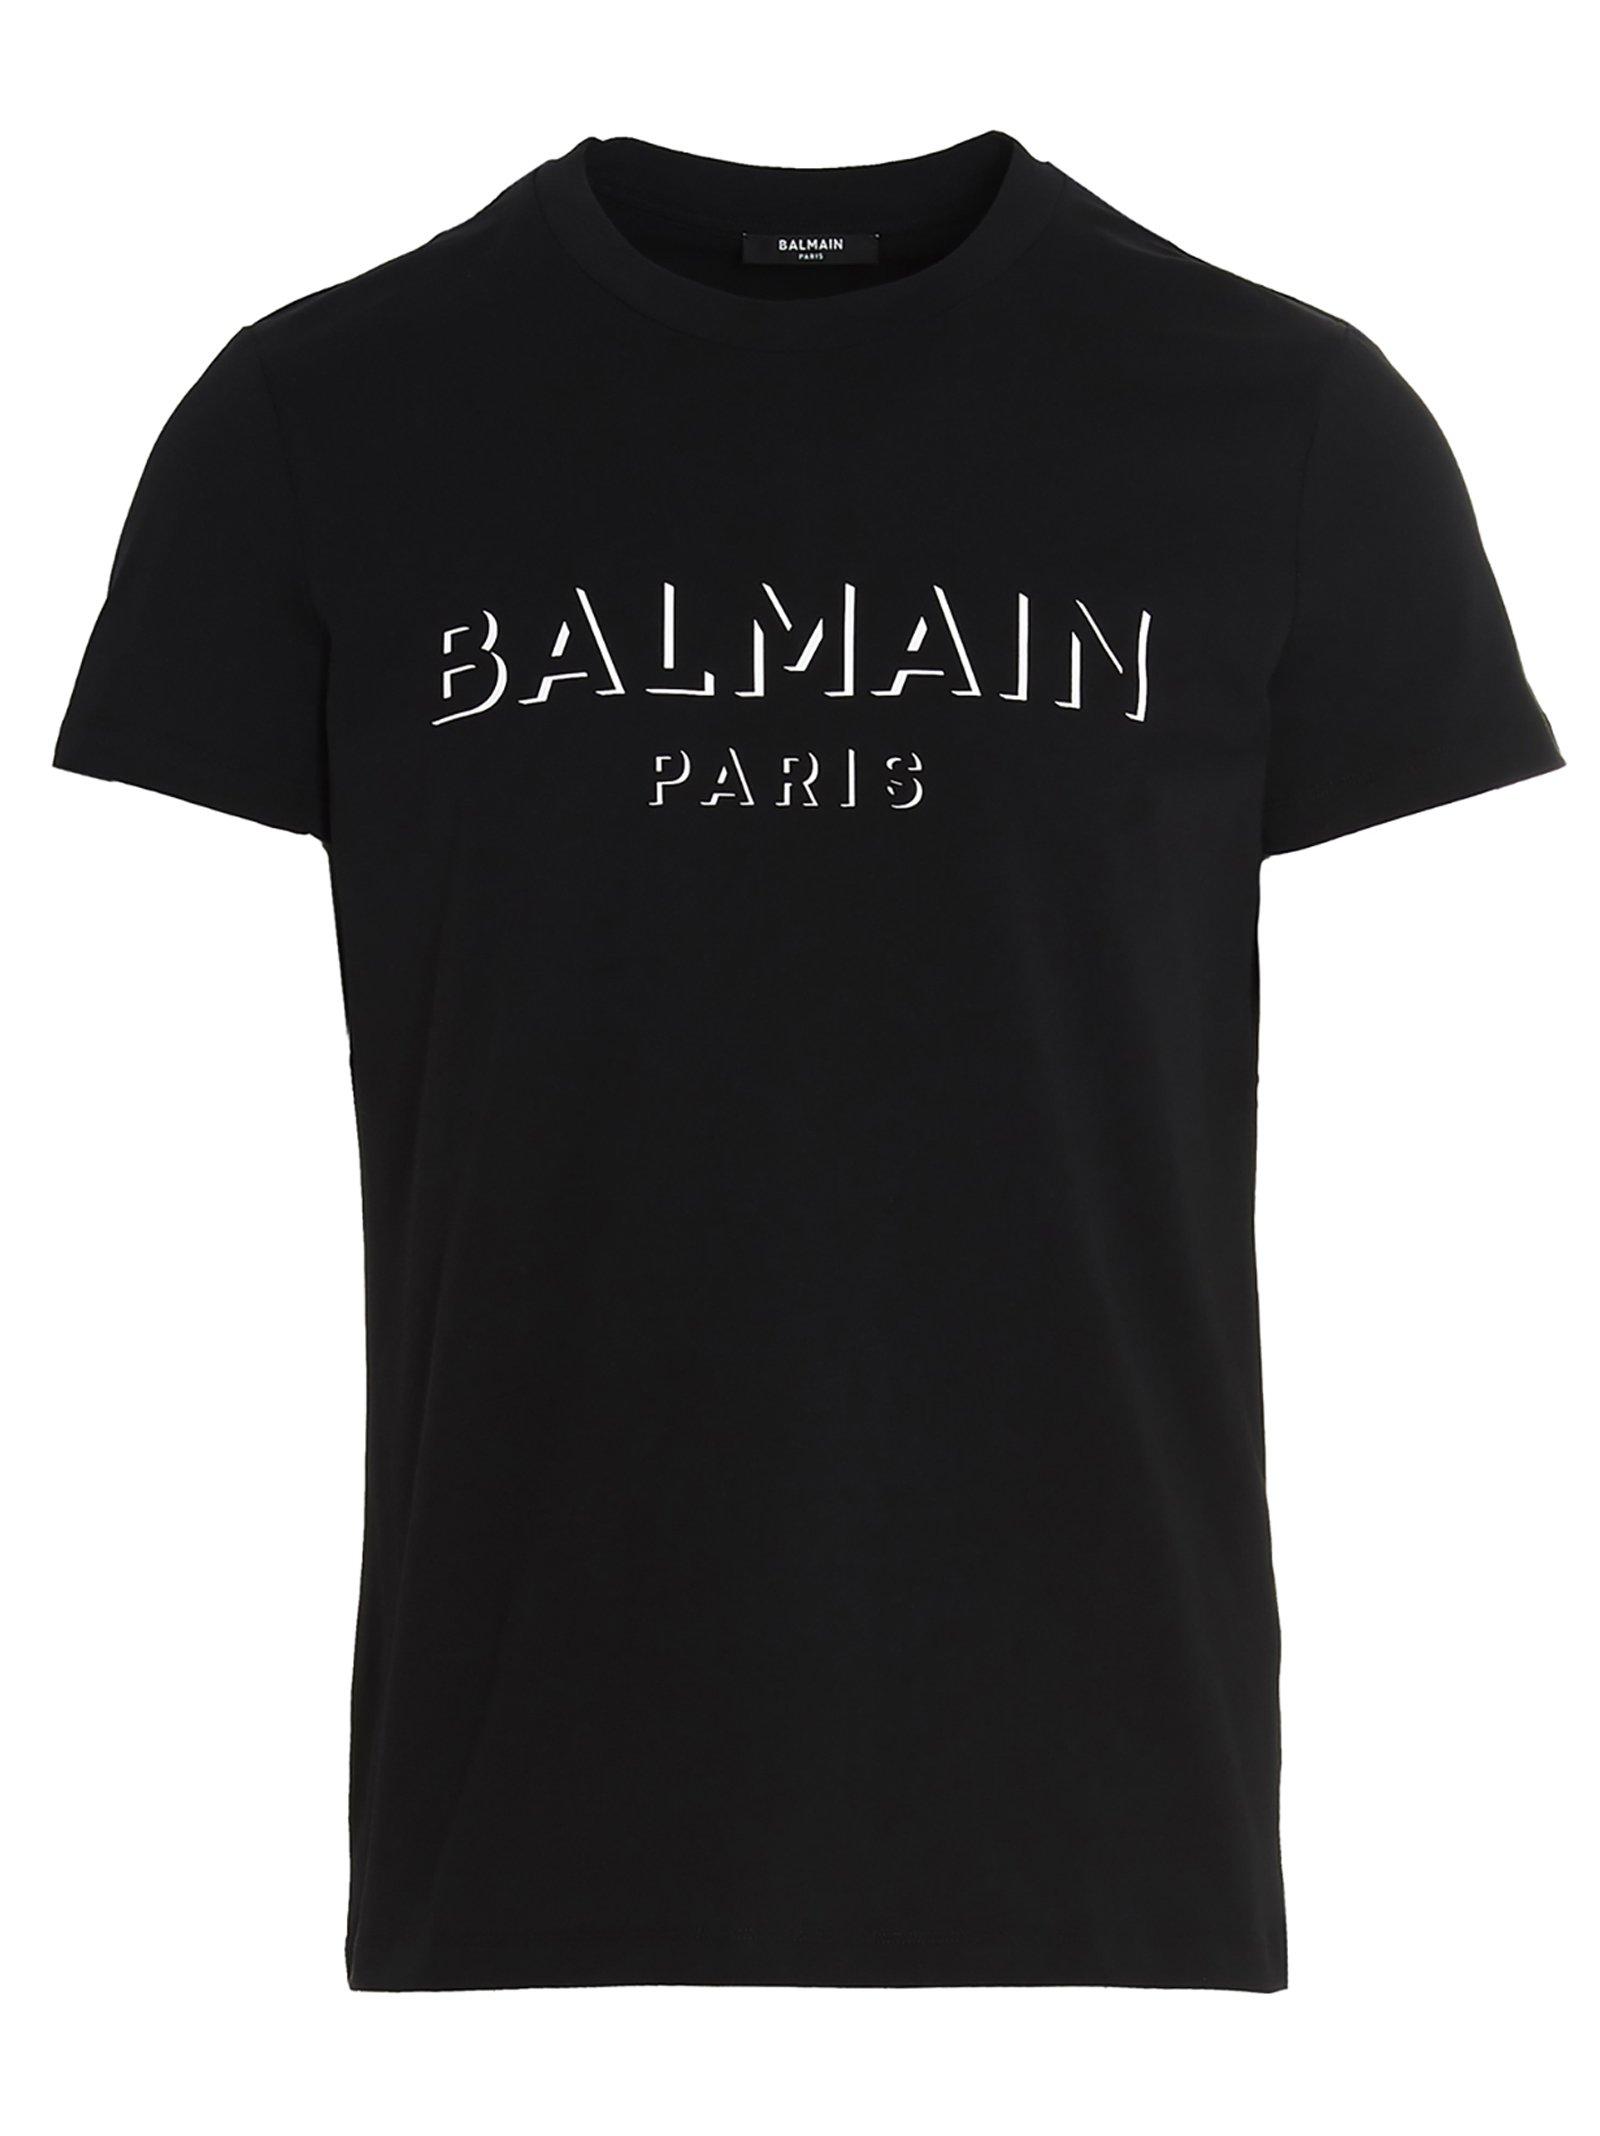 Balmain Cotton 3d Effect Logo T-shirt in Black for Men - Lyst